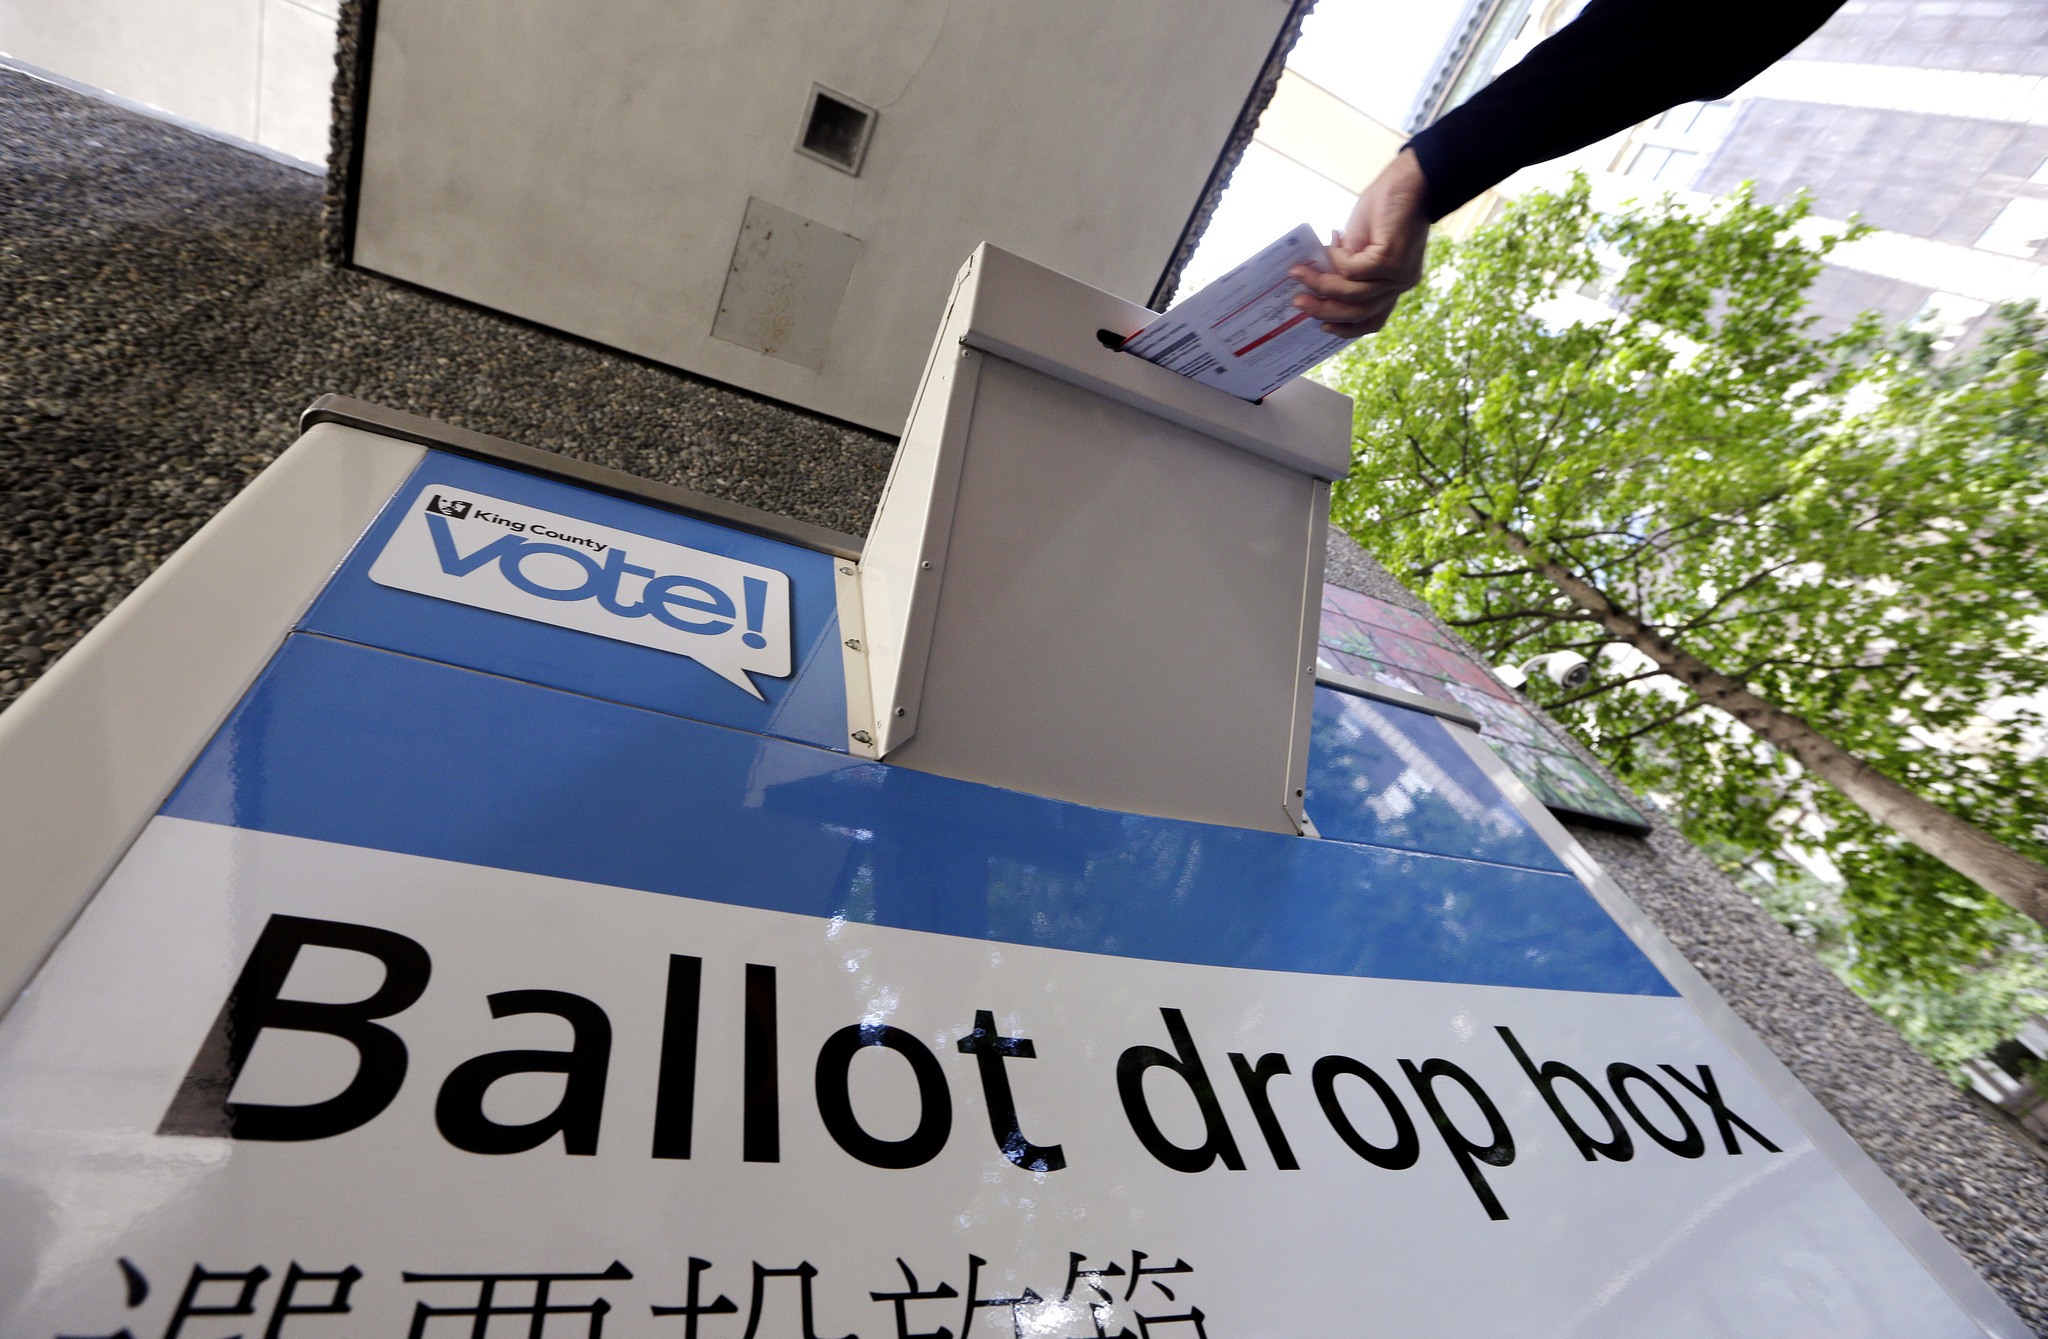 A voter drops a ballot into a ballot drop box Tuesday in Seattle. (AP Photo/Elaine Thompson)